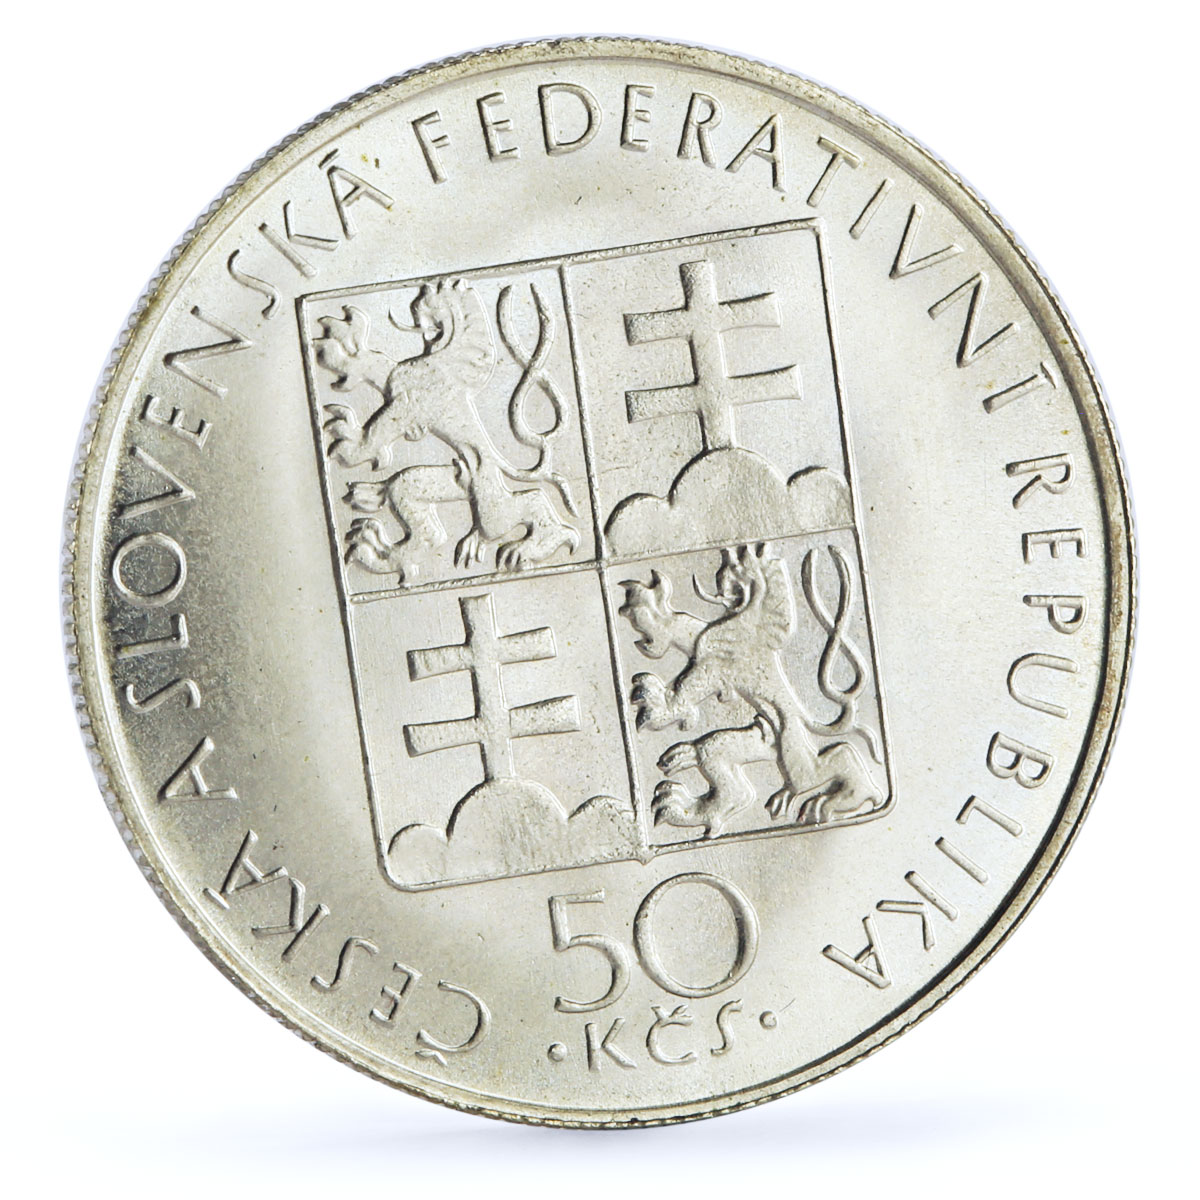 Czechoslovakia 50 korun St Agnes Religion Without Signature LK silver coin 1990